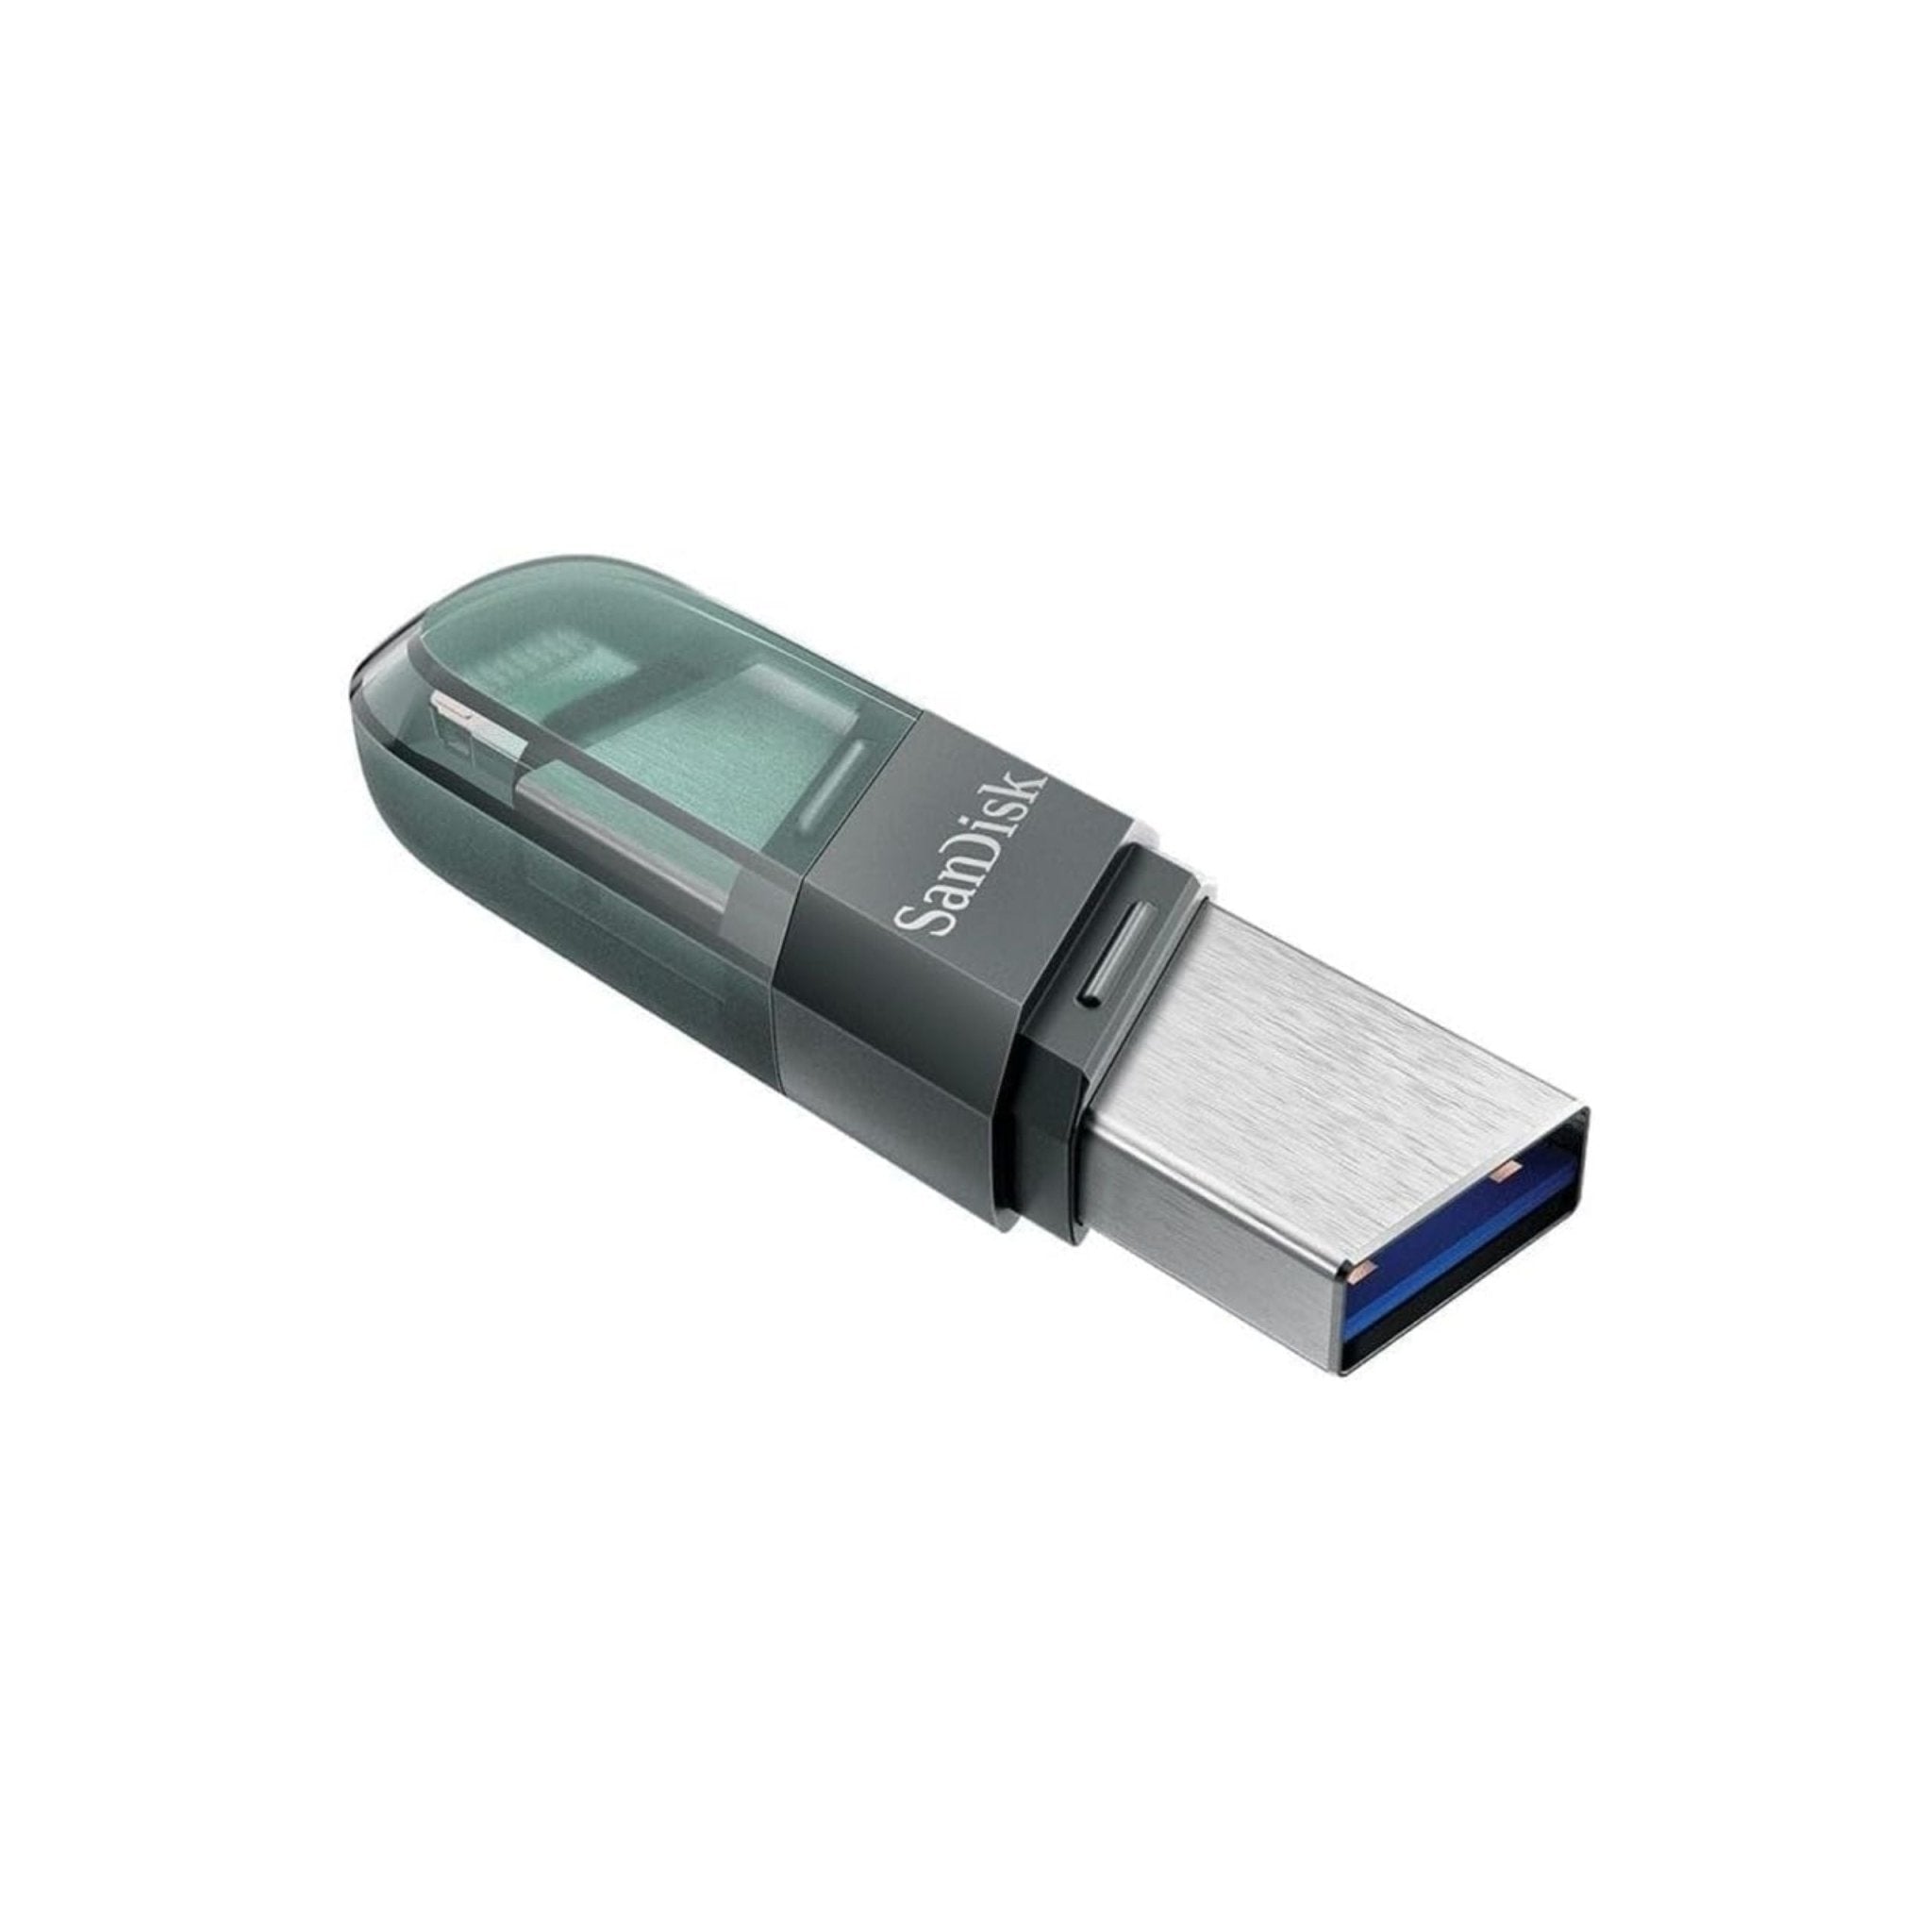 SanDisk iXpand Flash Drive Flip Type A - Lightning